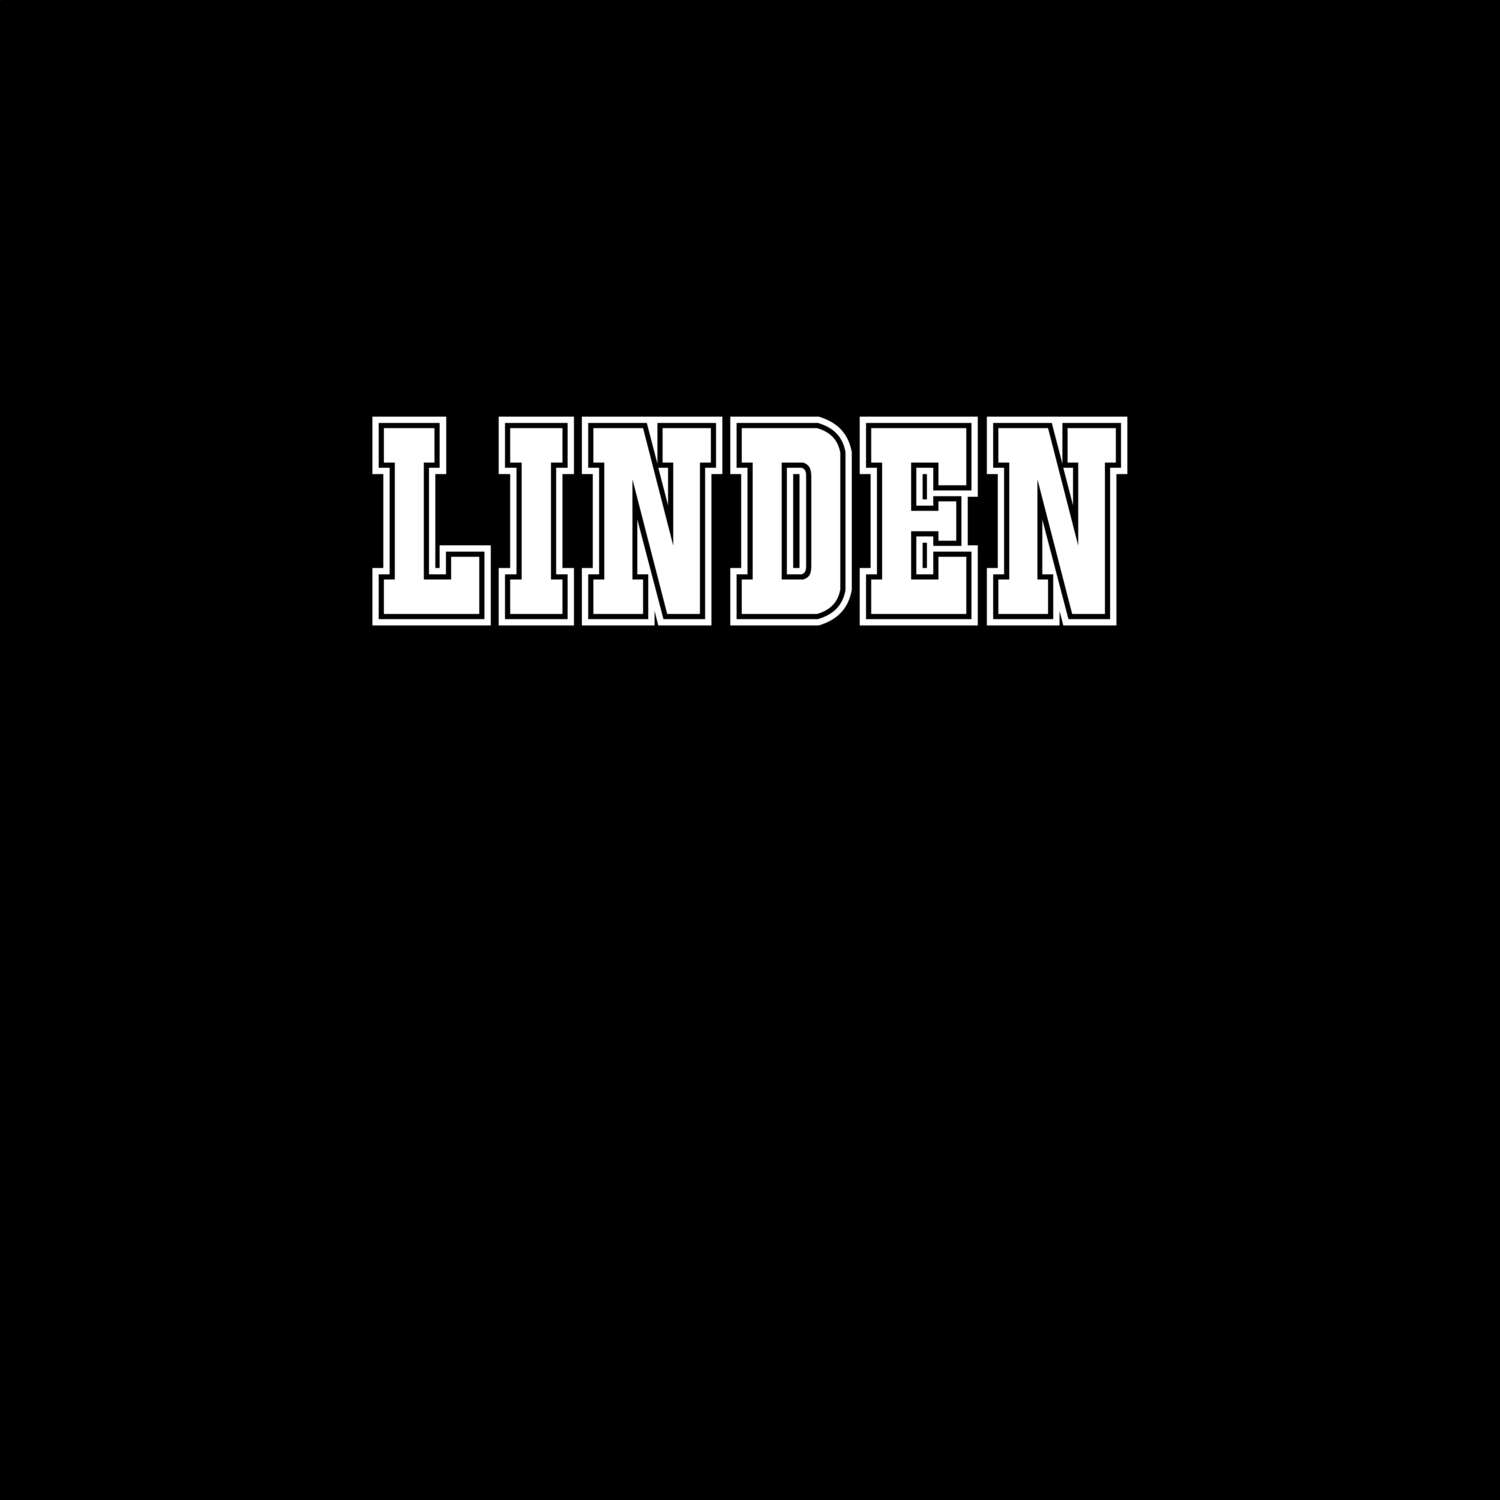 Linden T-Shirt »Classic«